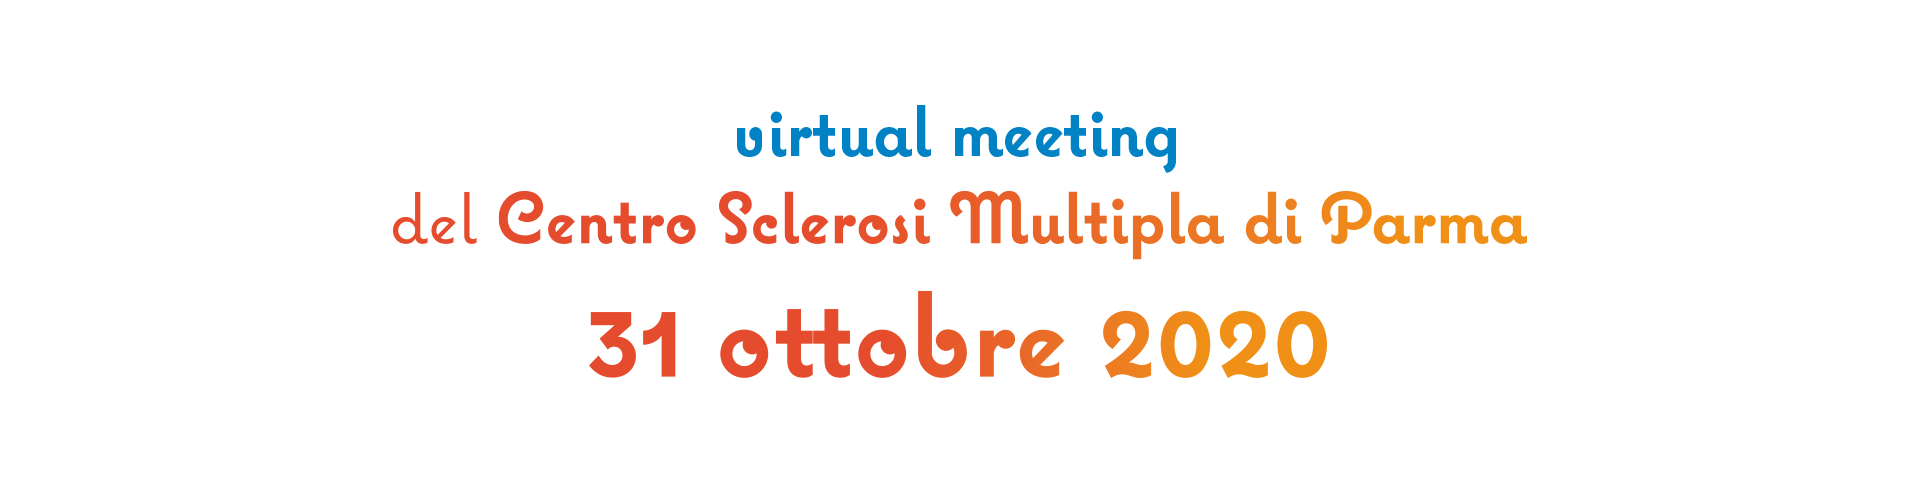 virtual_meeting